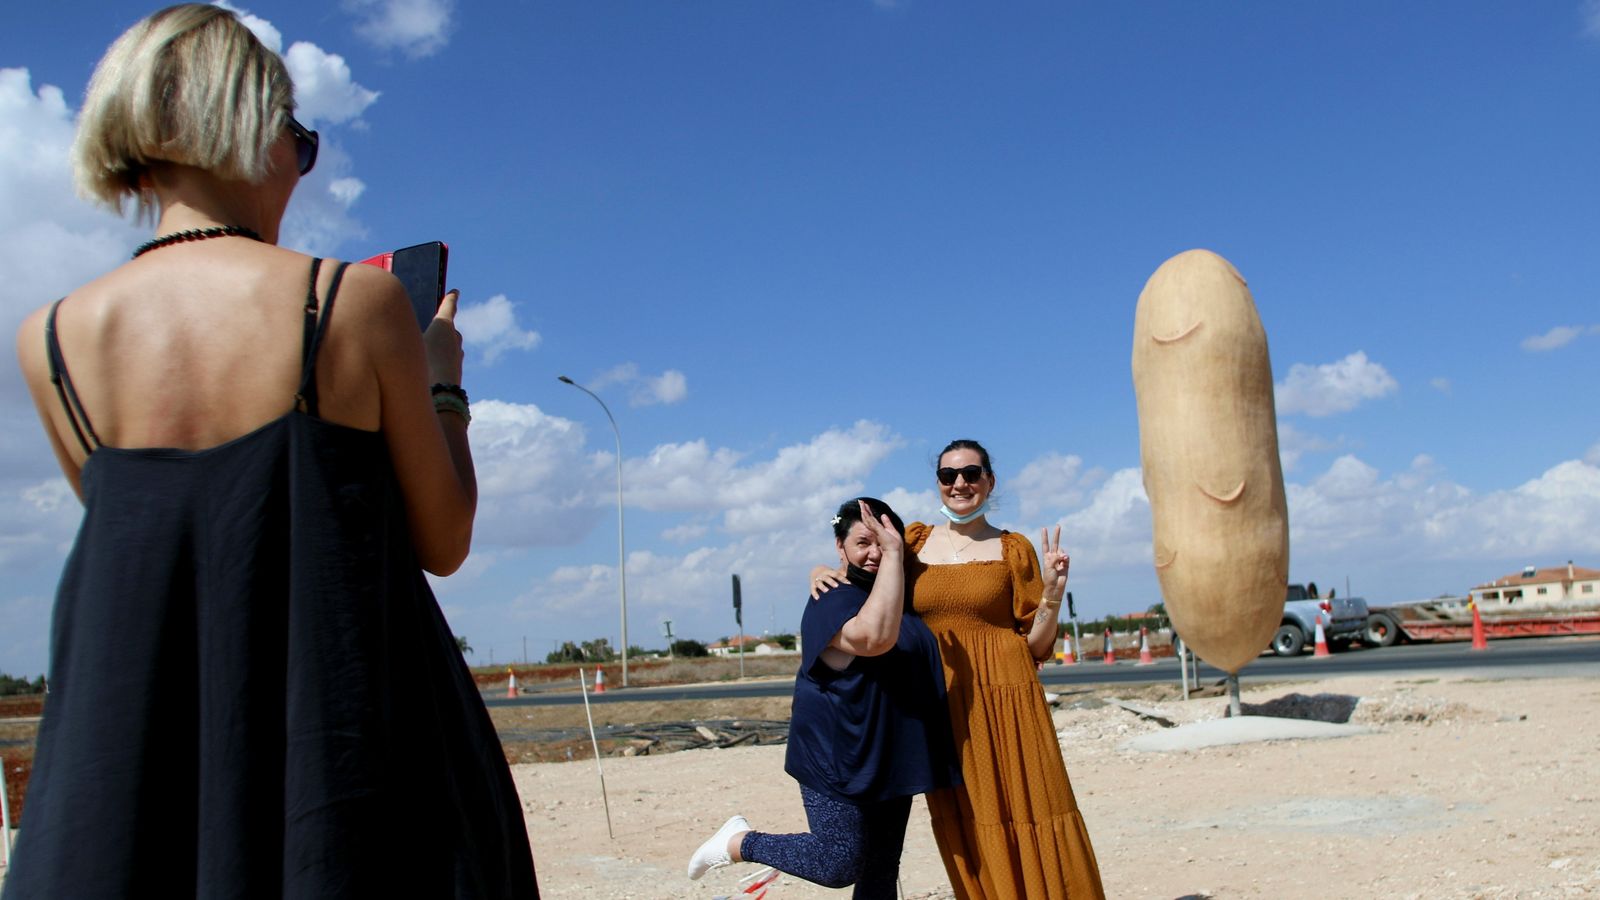 ‘Big potato’ statue cut down by vandals in village in Cyprus